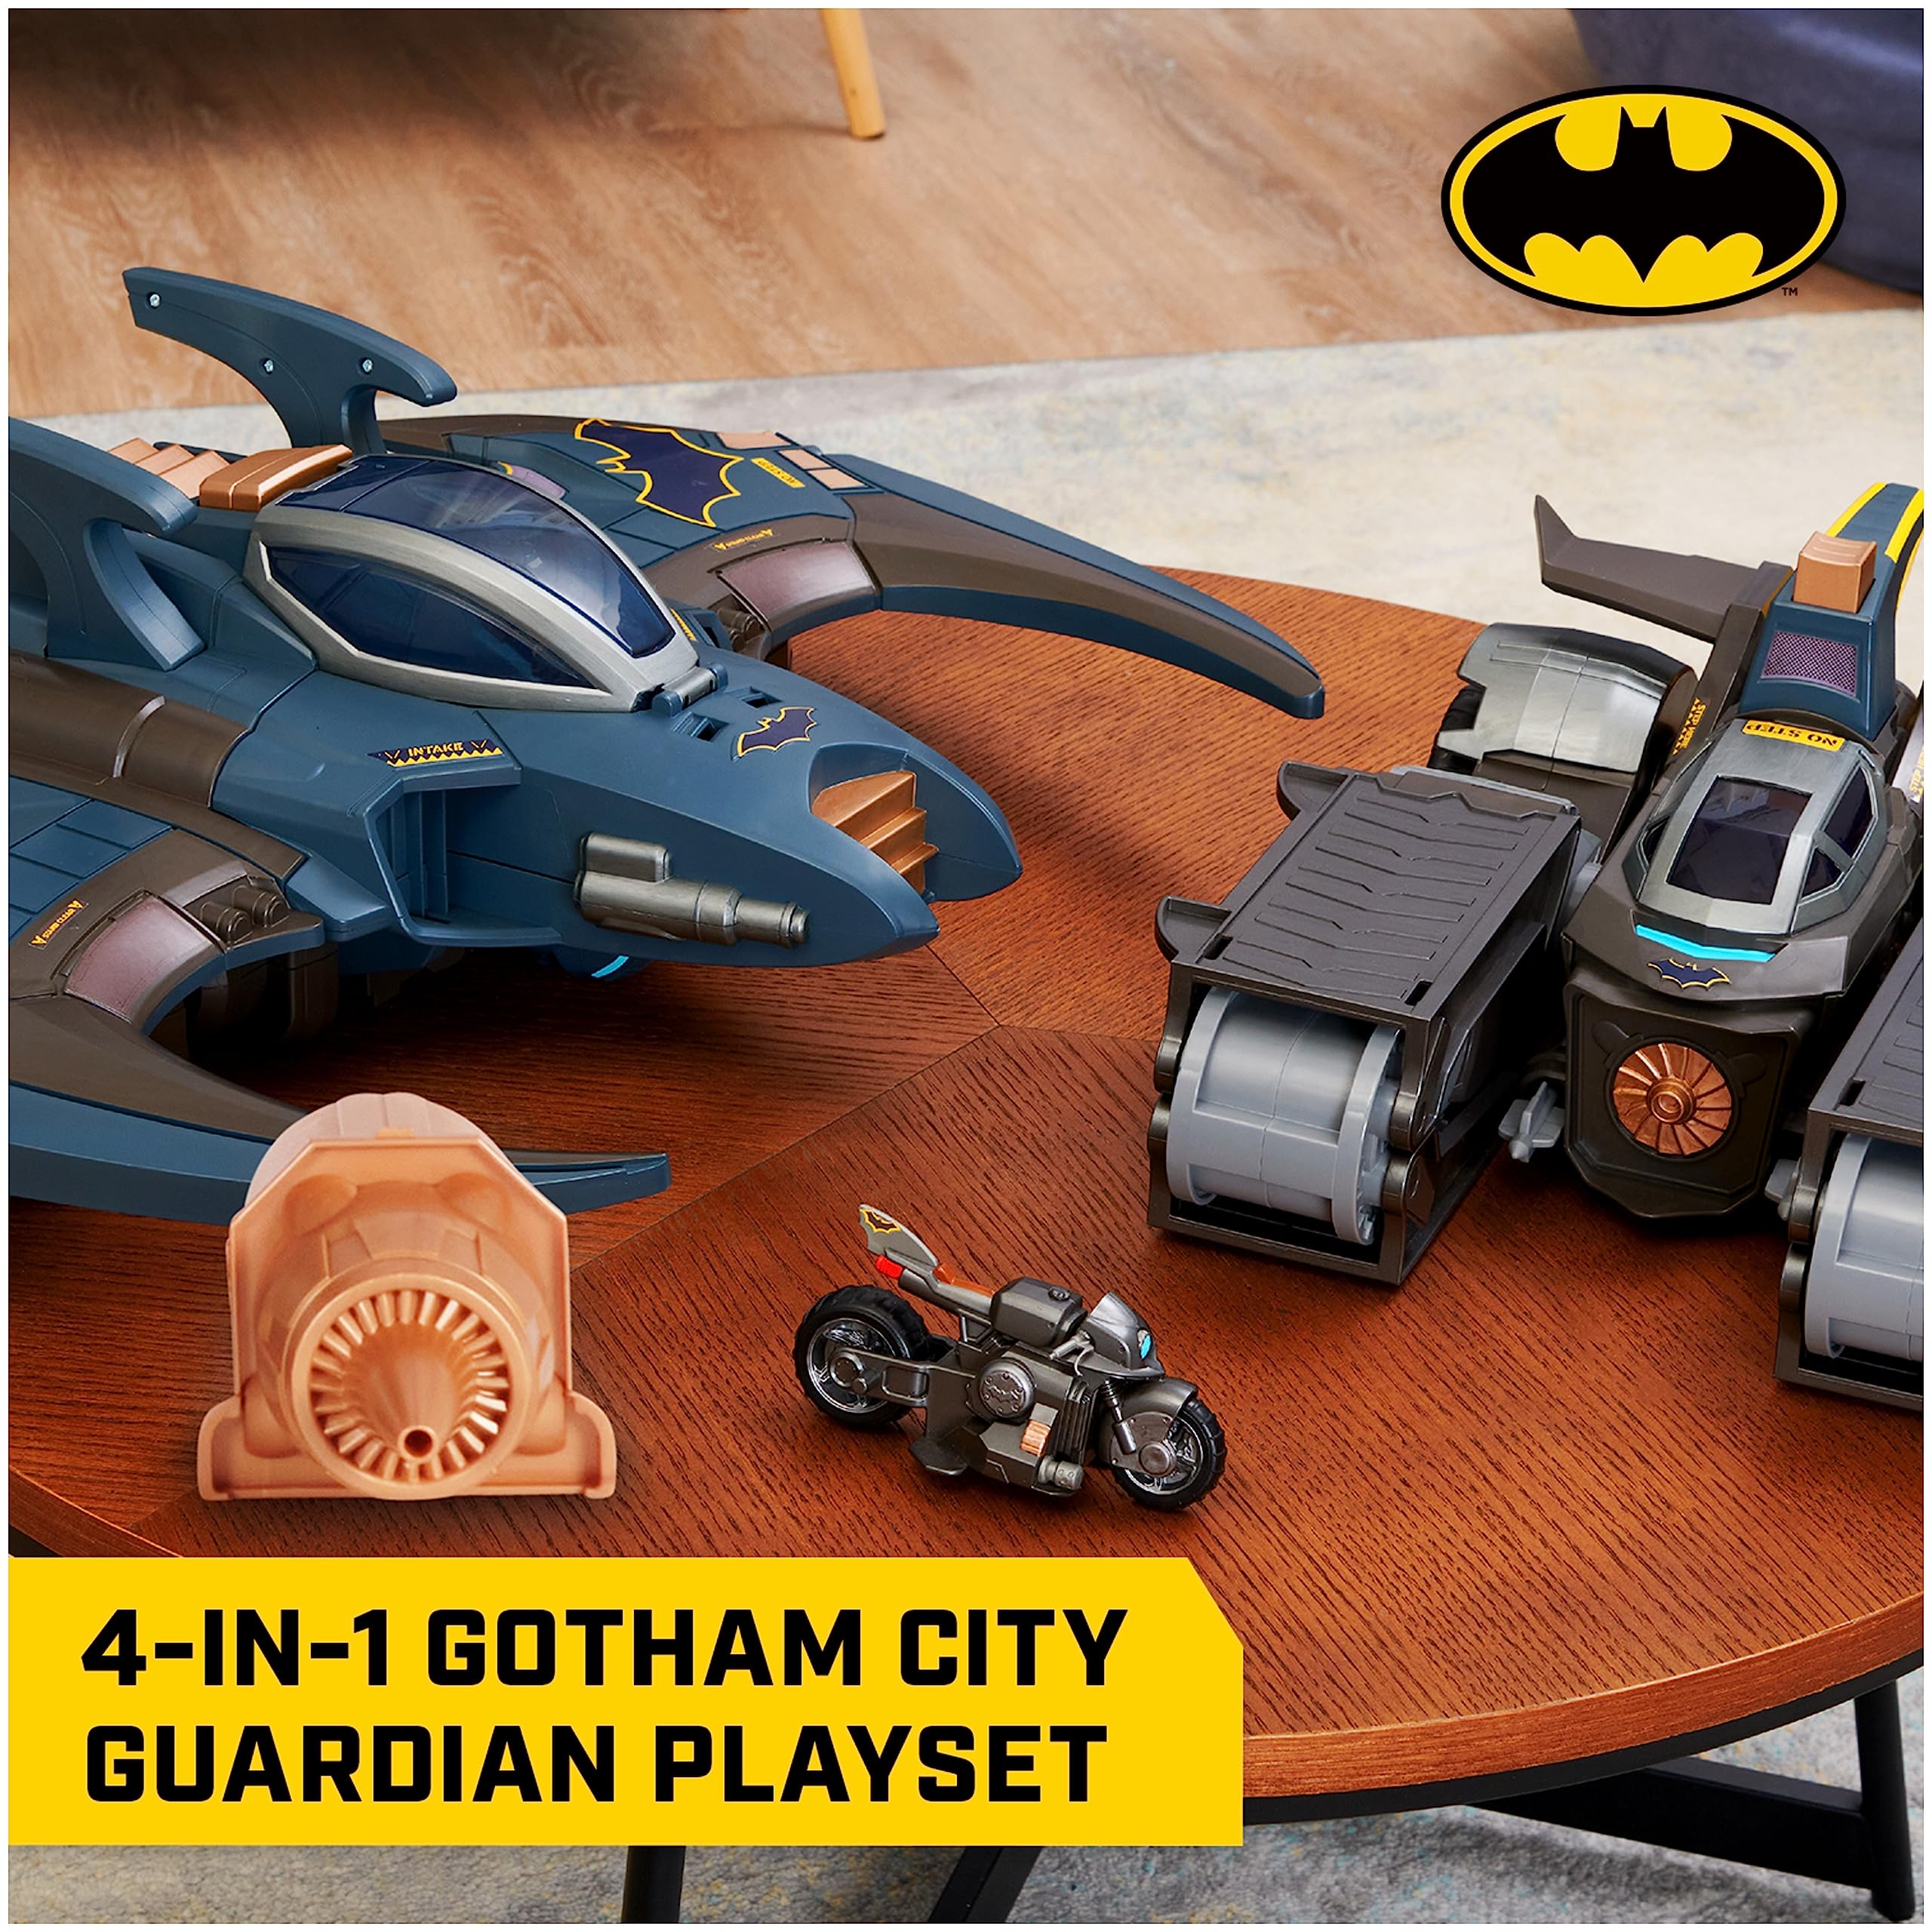 DC Comics, Batman, Gotham City Guardian Playset, 4-in-1 Transformation, Exclusive Batman Figure, Lights & 40+ Sounds, Kids Toy for Boys & Girls